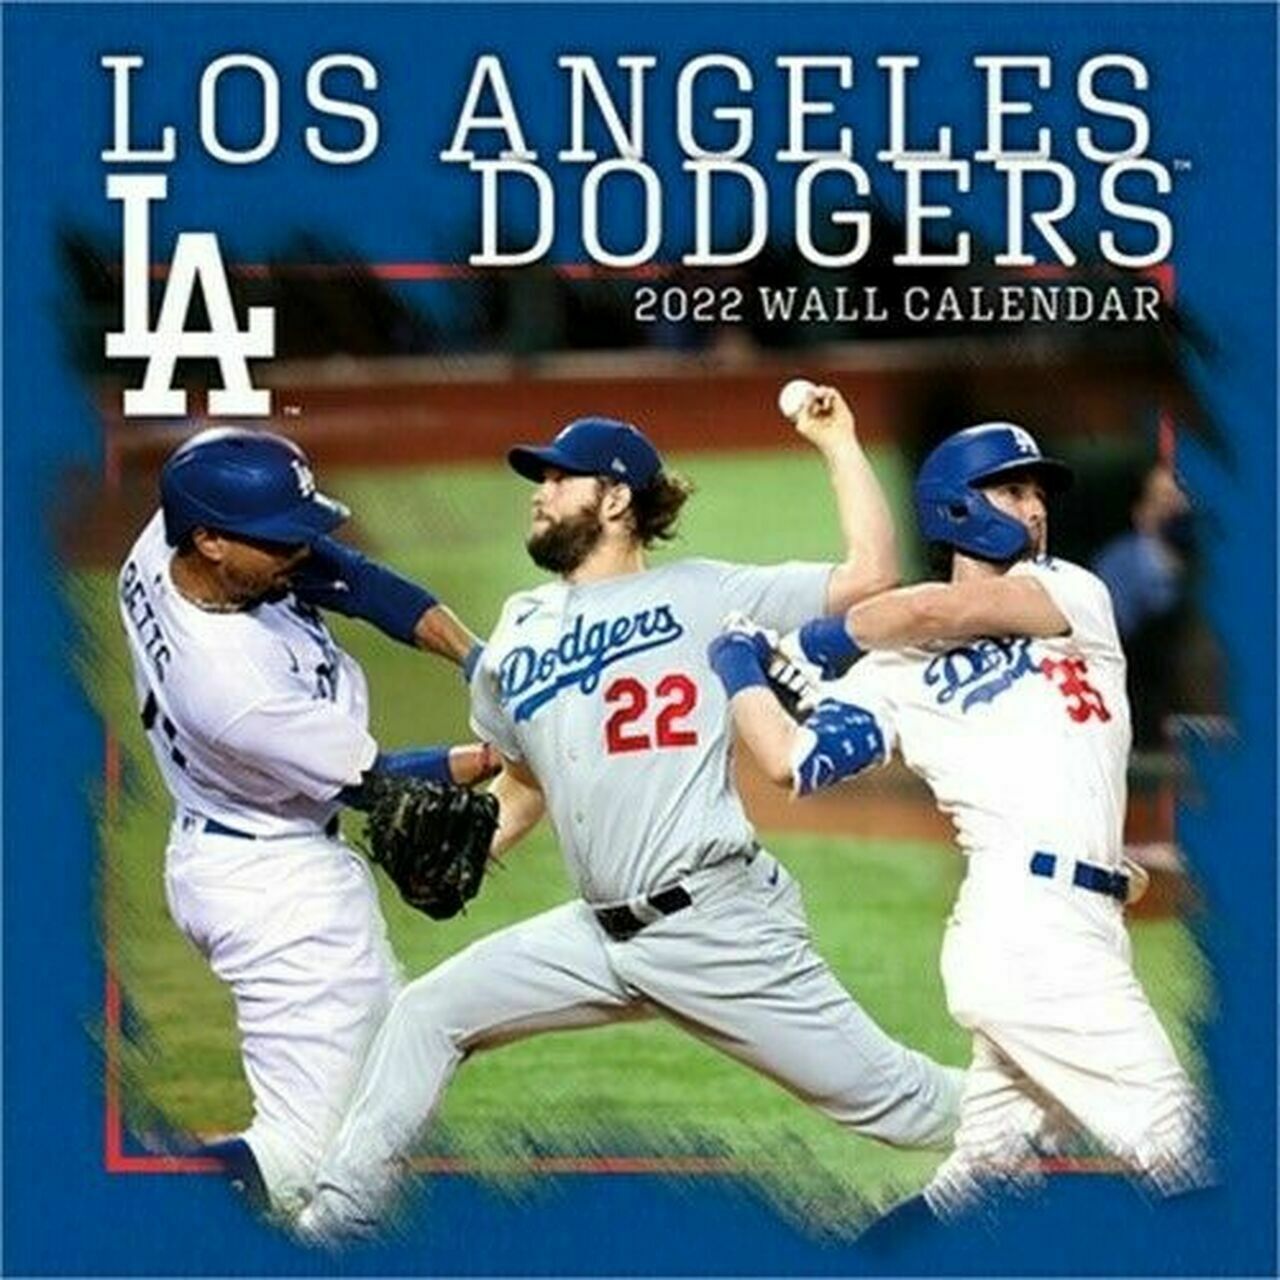 Los Angeles Dodgers 2022 Wall Calendar BaseballMLB